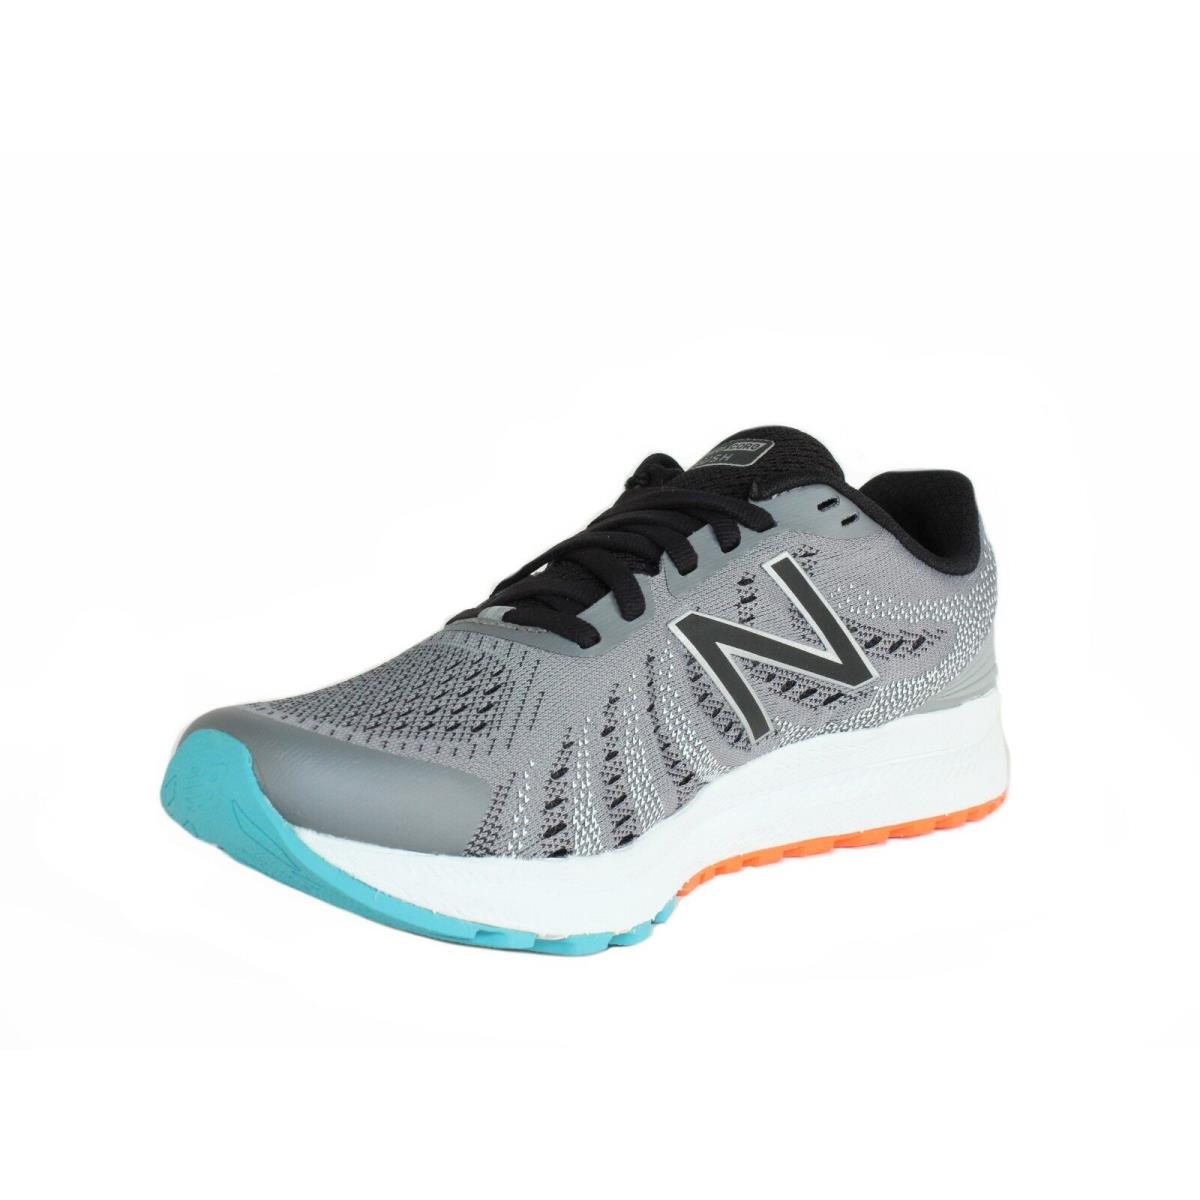 New Balance shoes  - Multi-Color (Gray, orange, green) 7